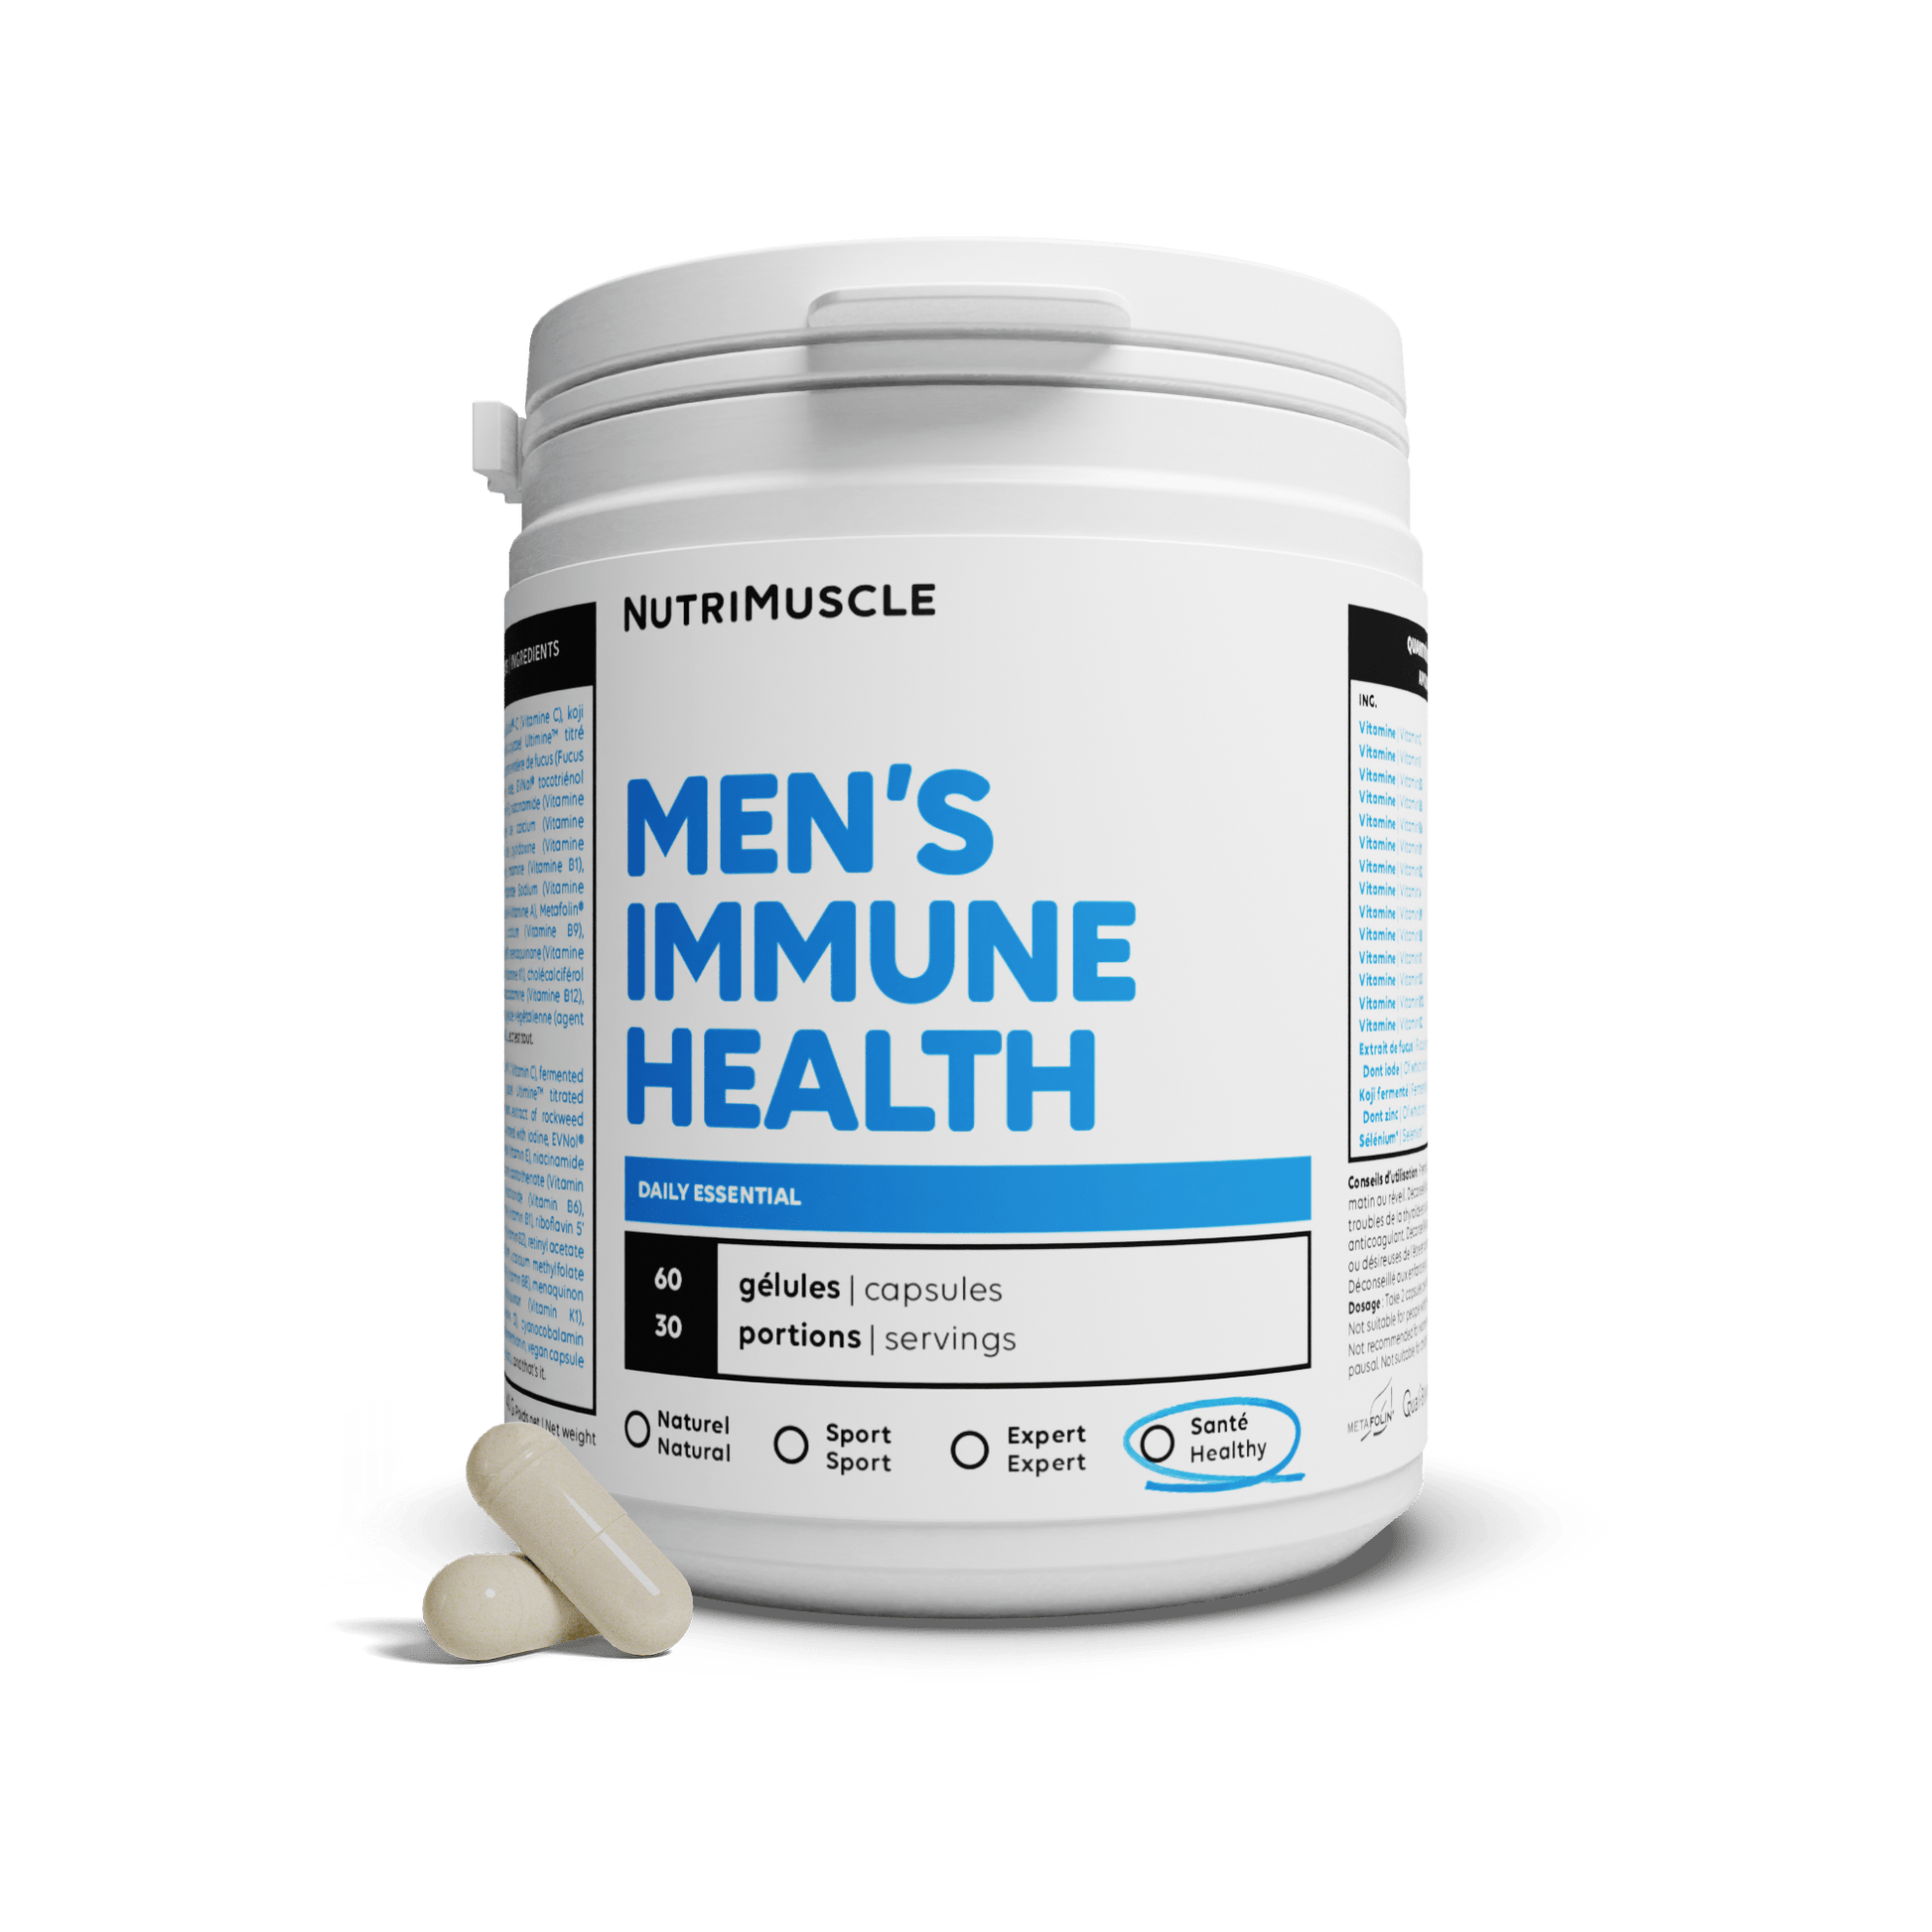 Nutrimuscle Vitamines 60 gélules Men's Immune Health